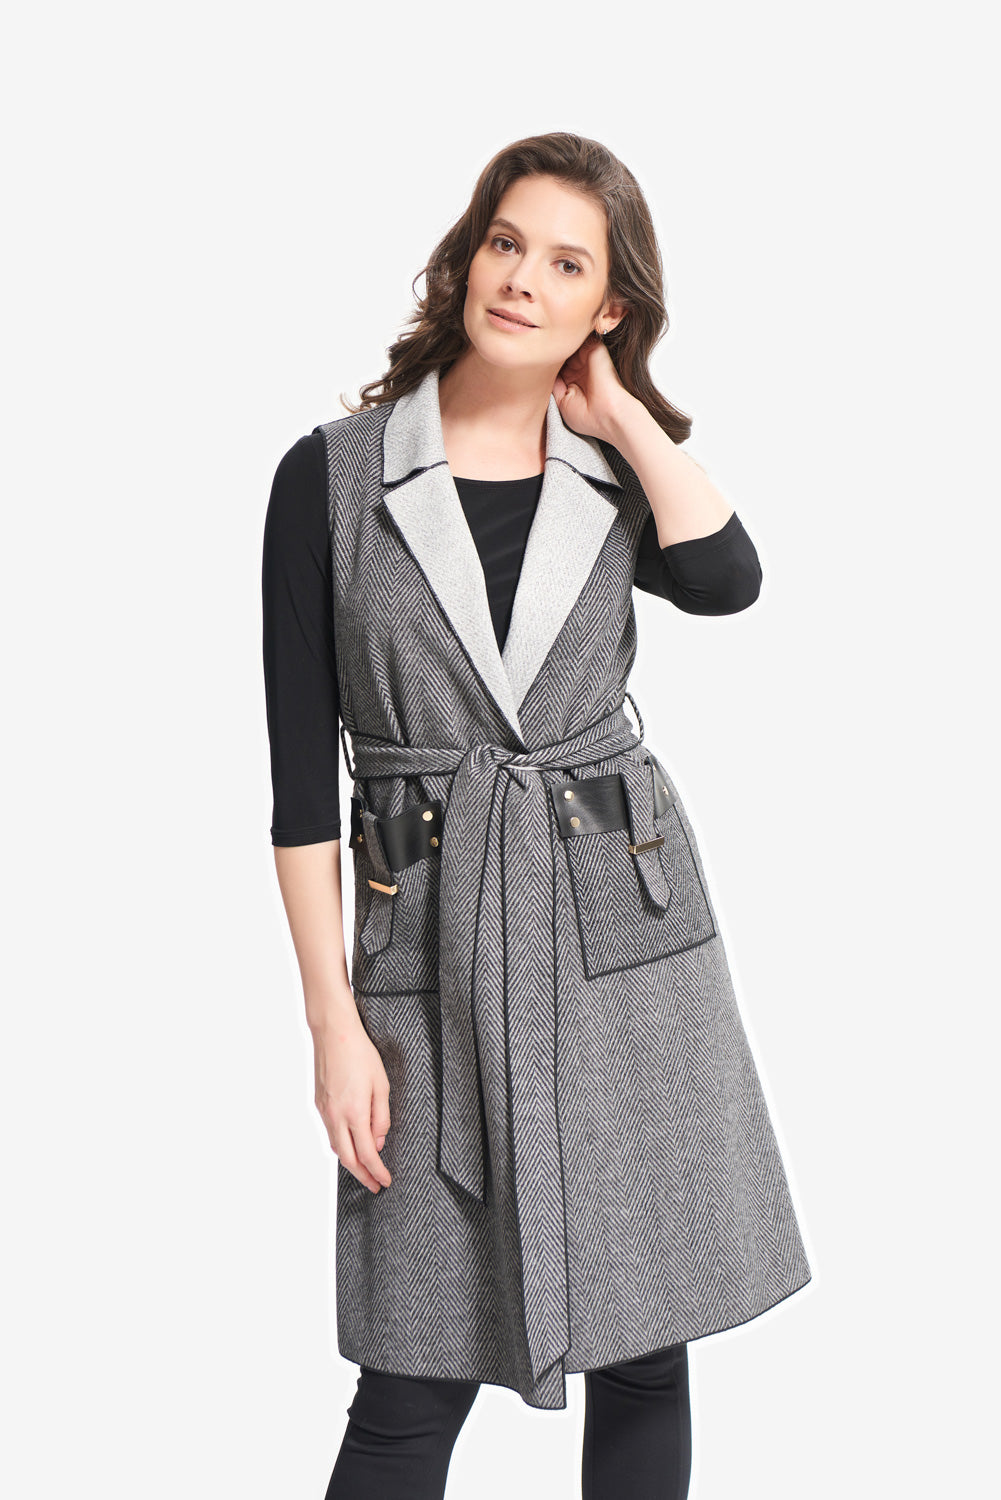 Joseph Ribkoff Black-Grey Knit Sleeveless Jacket Style 214195